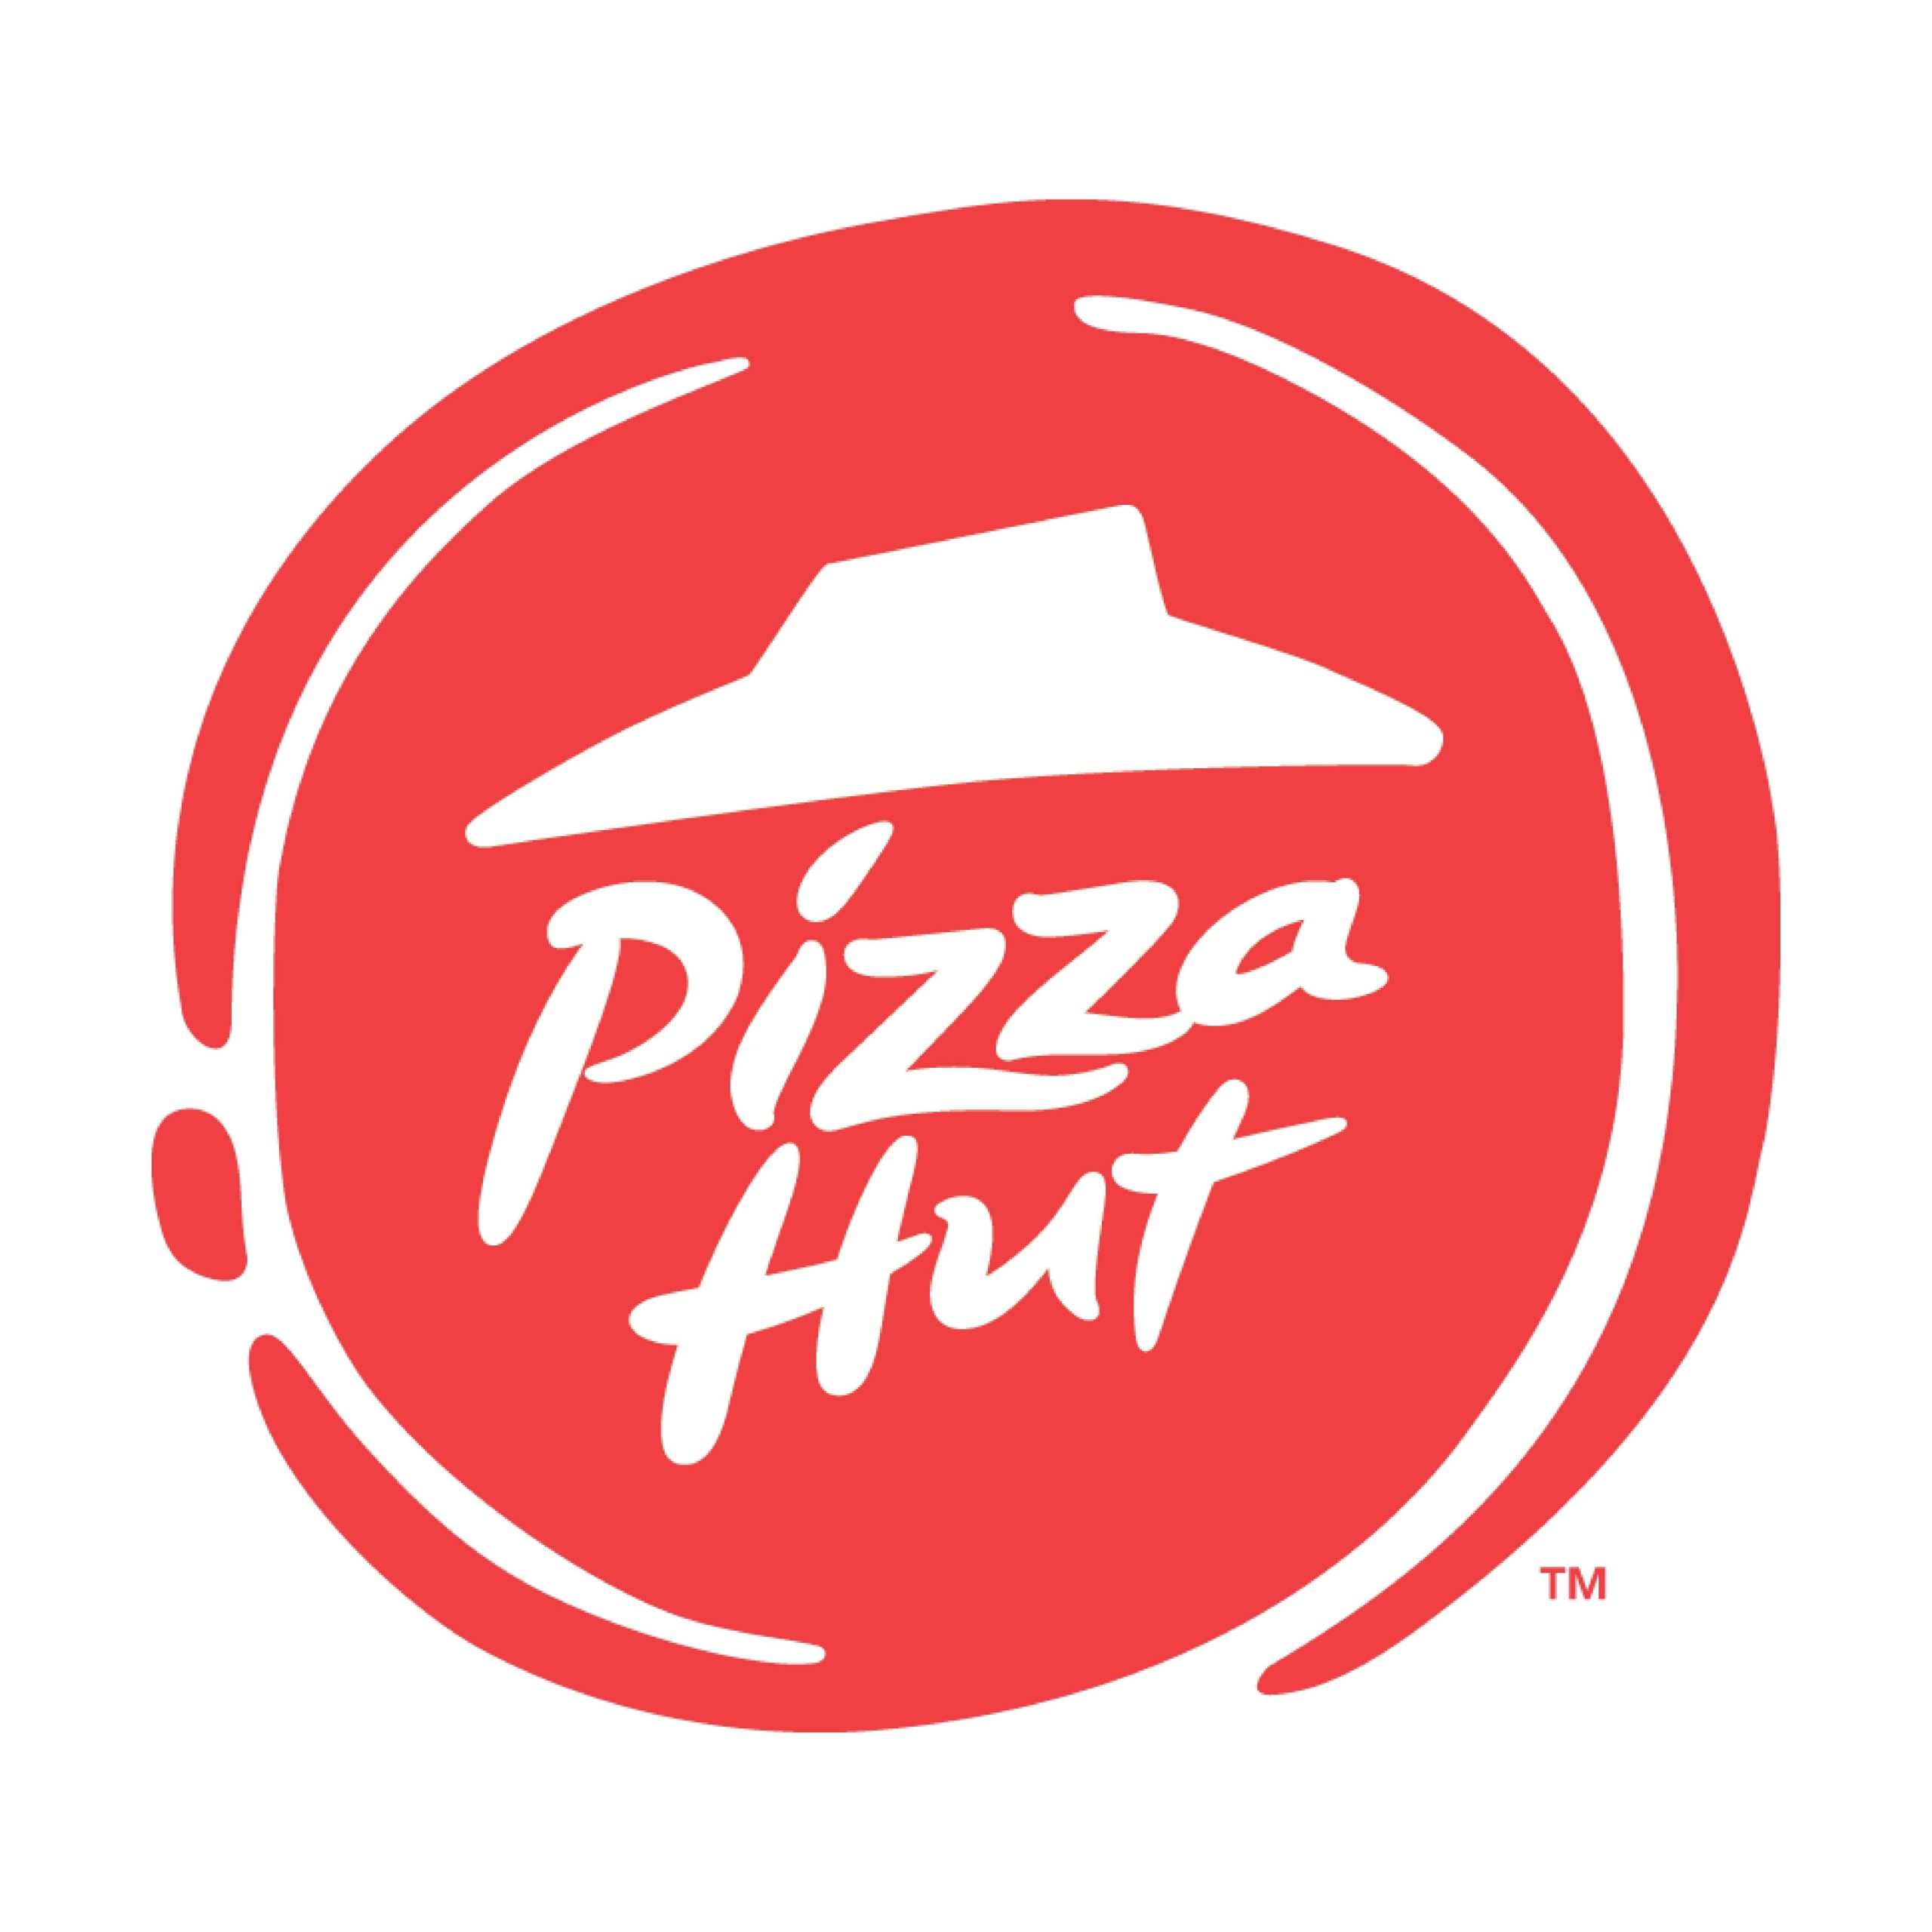 415139 Pizza Hut Logo 20141 scaled